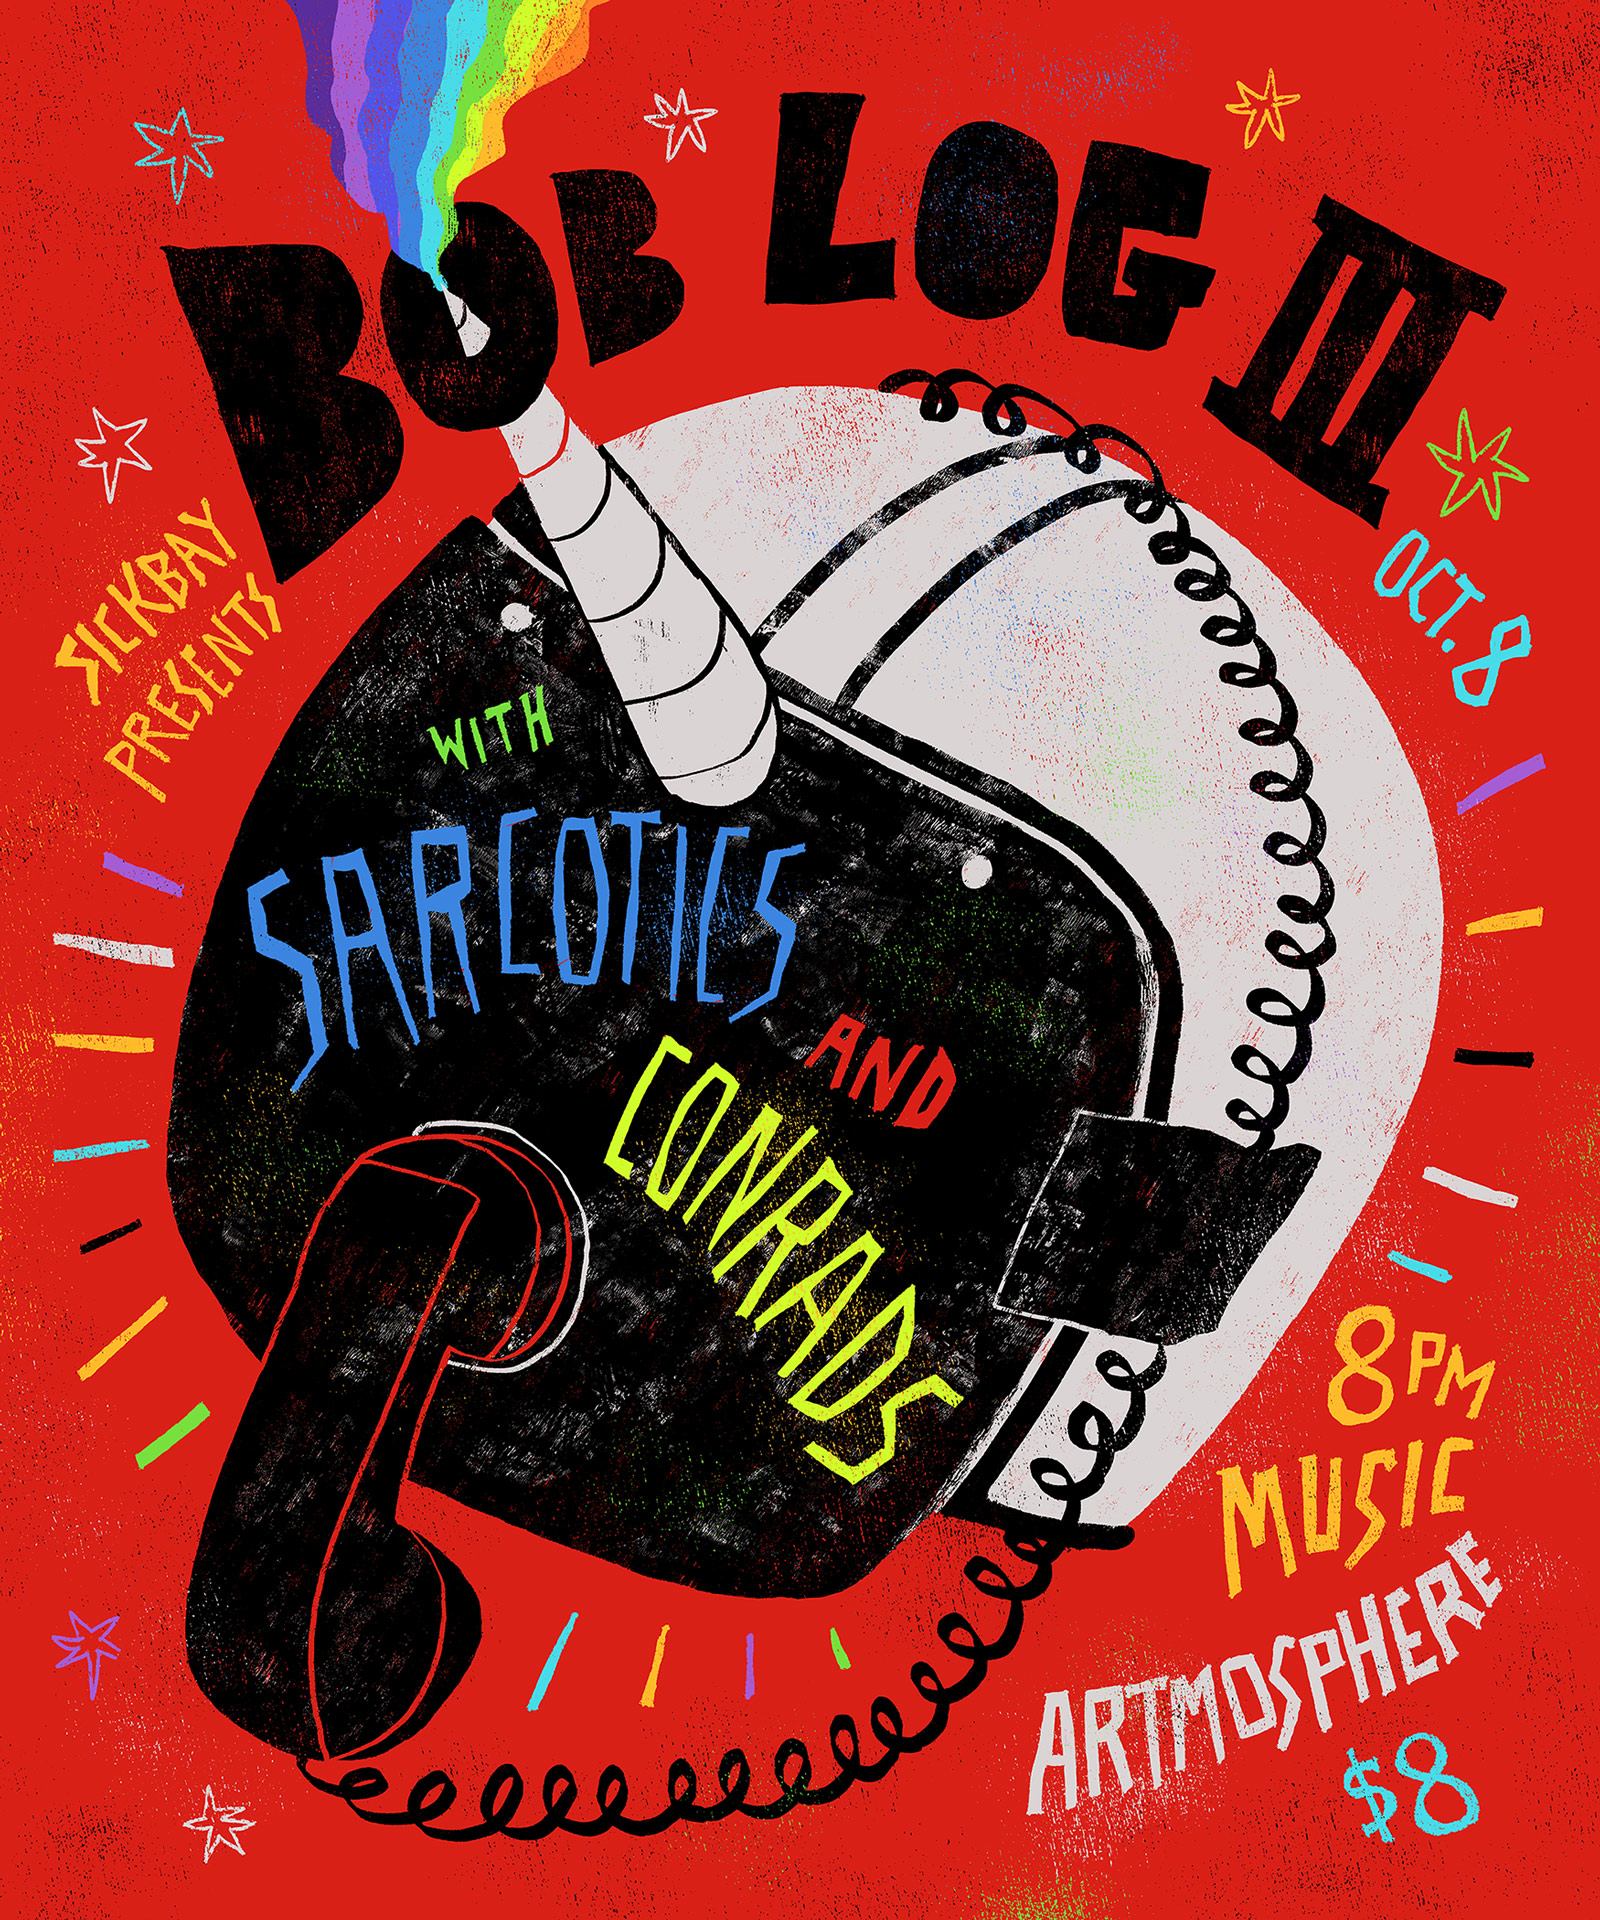 Bob Log III